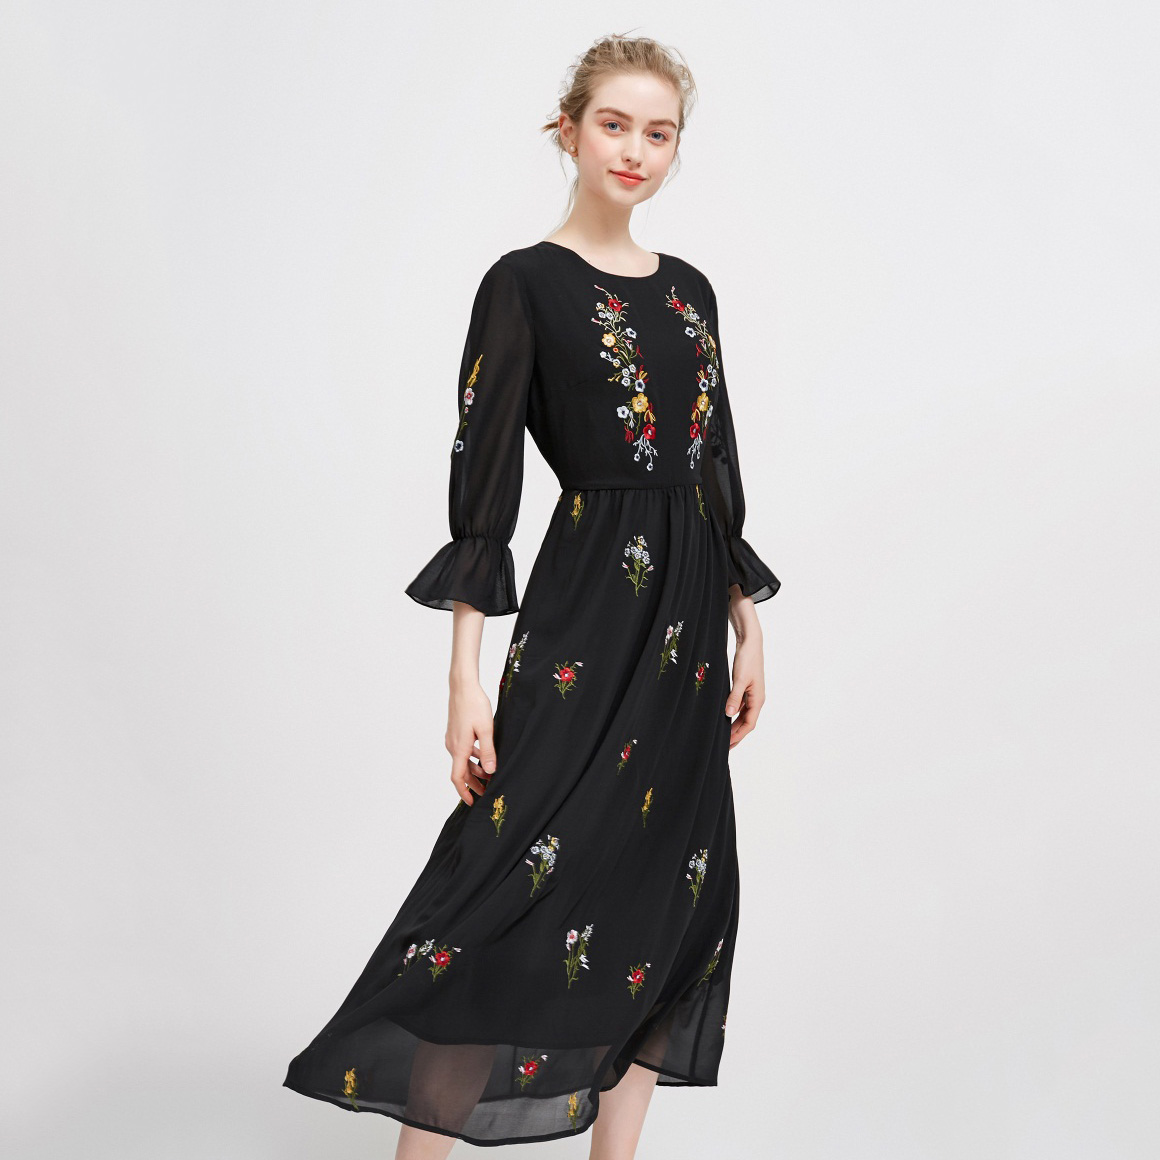 Dongfan-Printing Woman Dress Summer 2018 Beautiful Summer Dresses-4